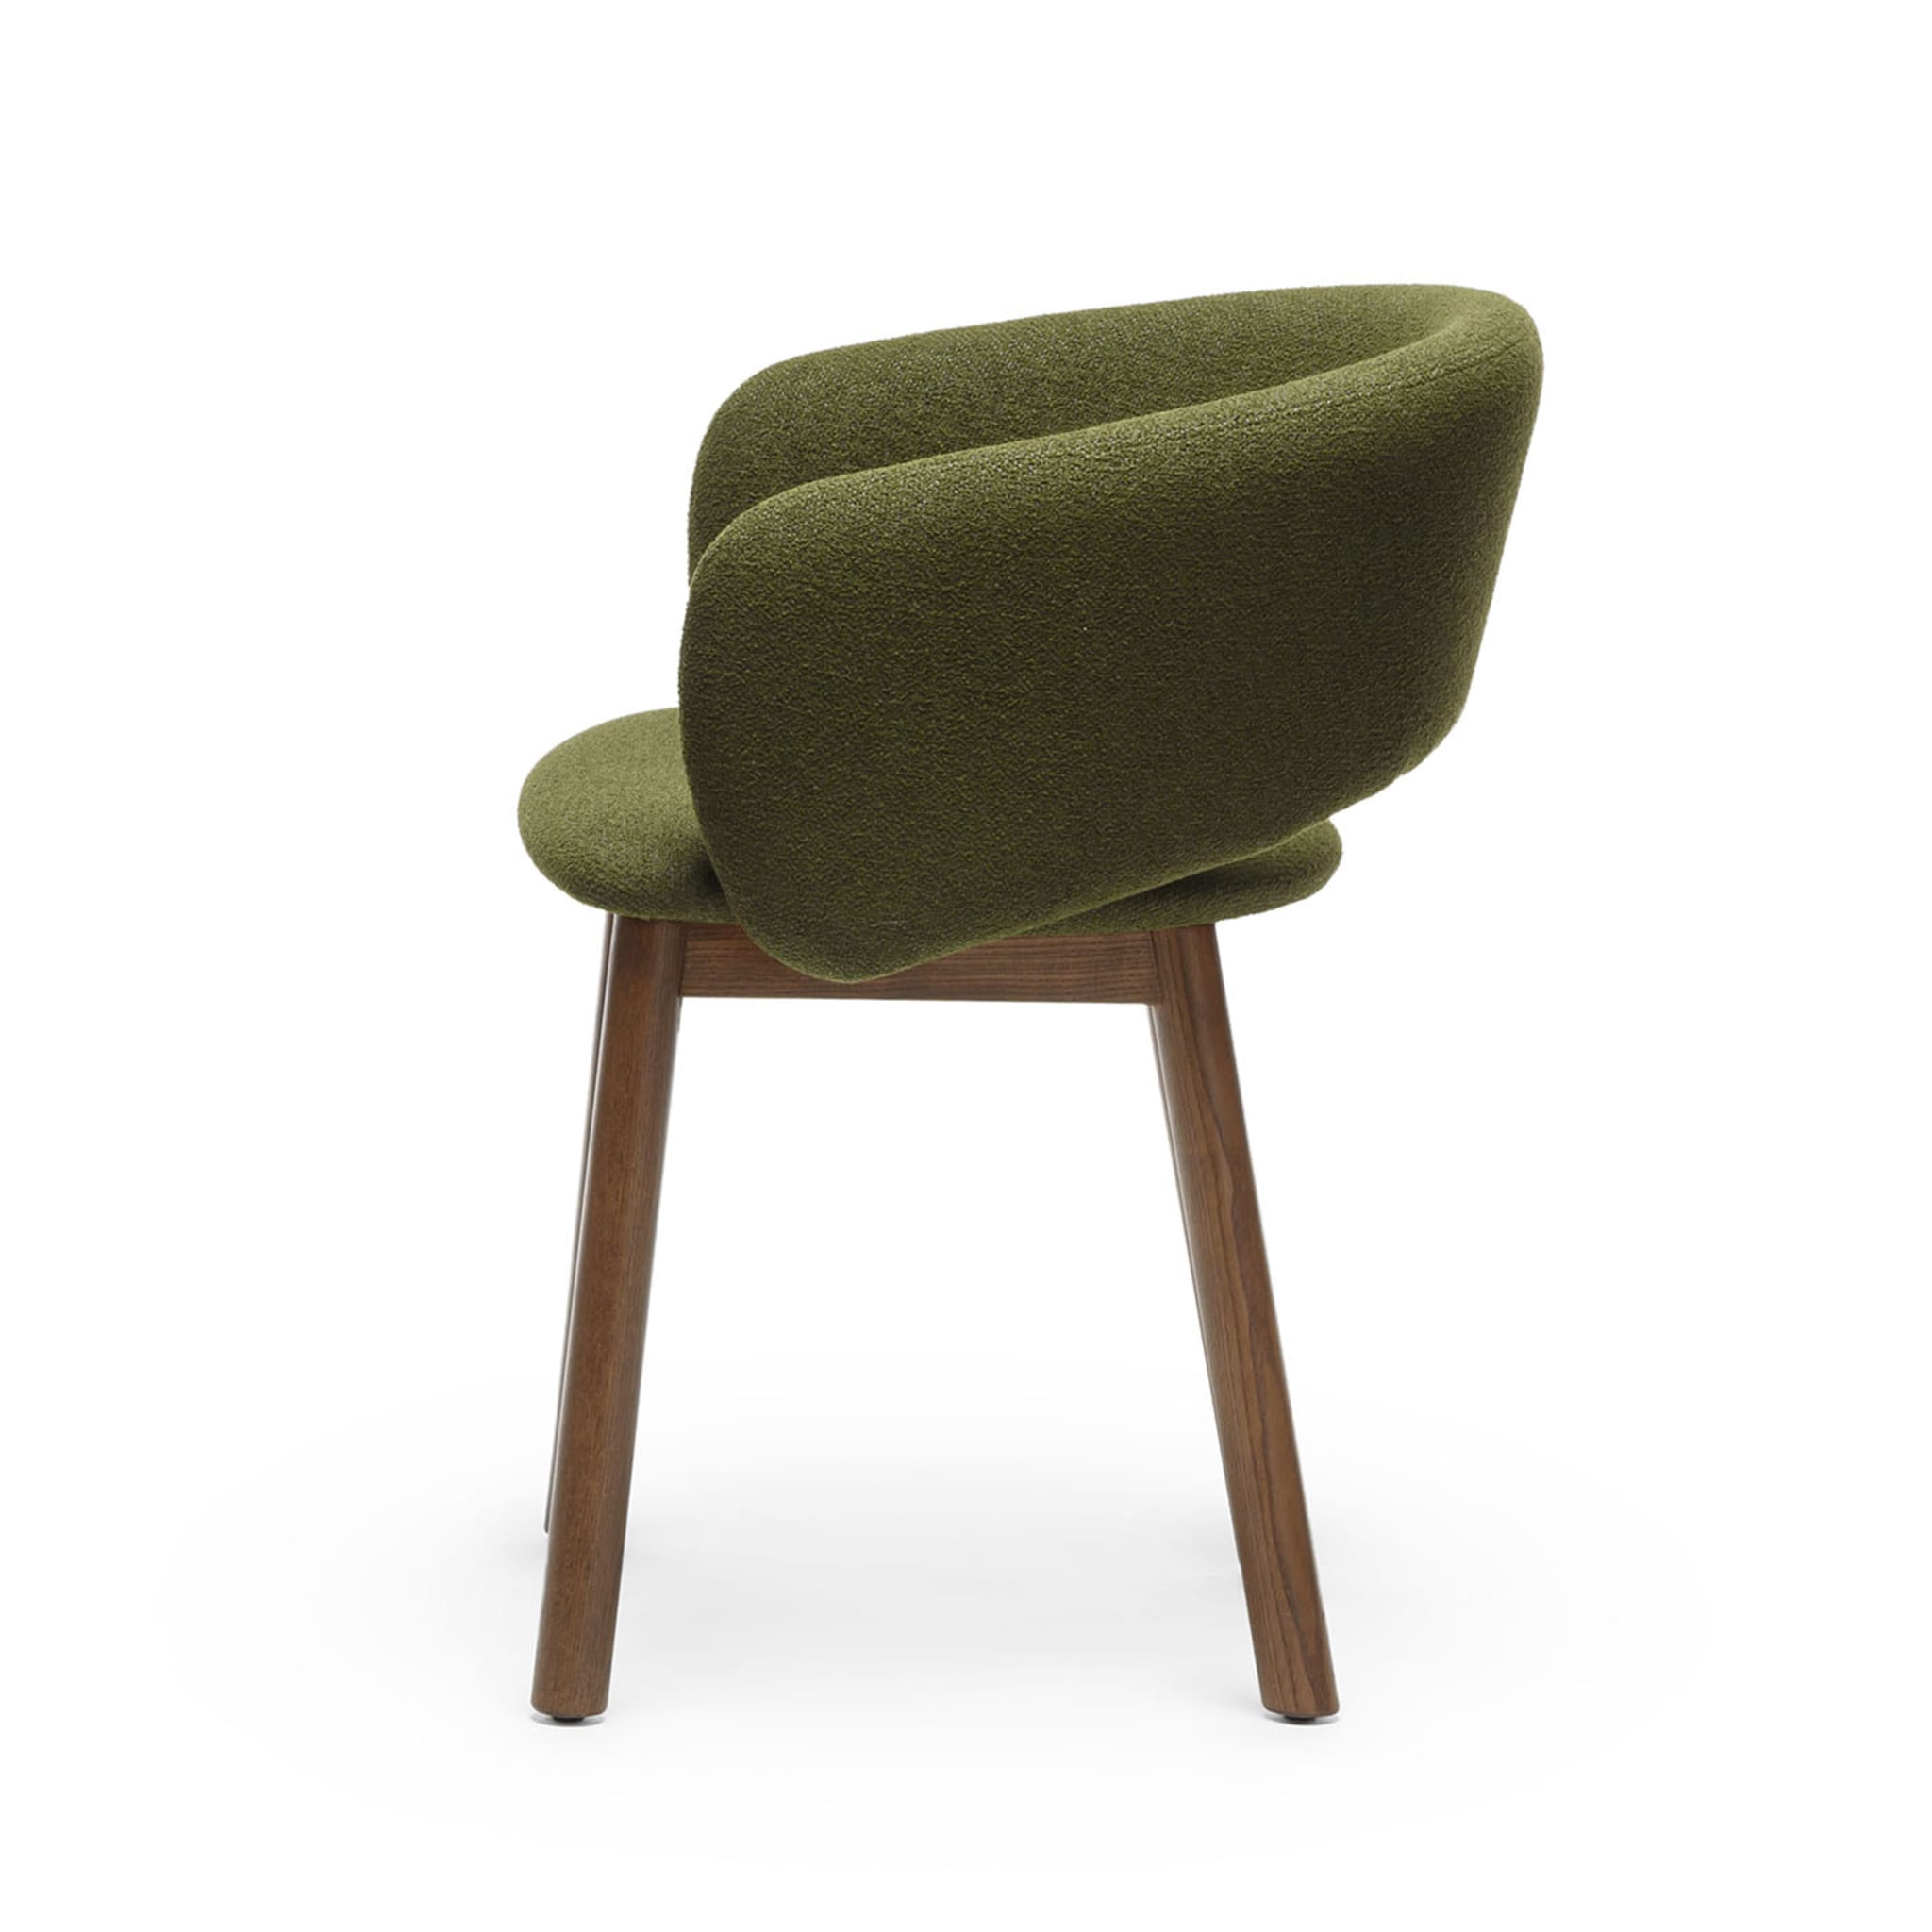 Bel S Green Chair By Pablo Regano - Alternative view 4